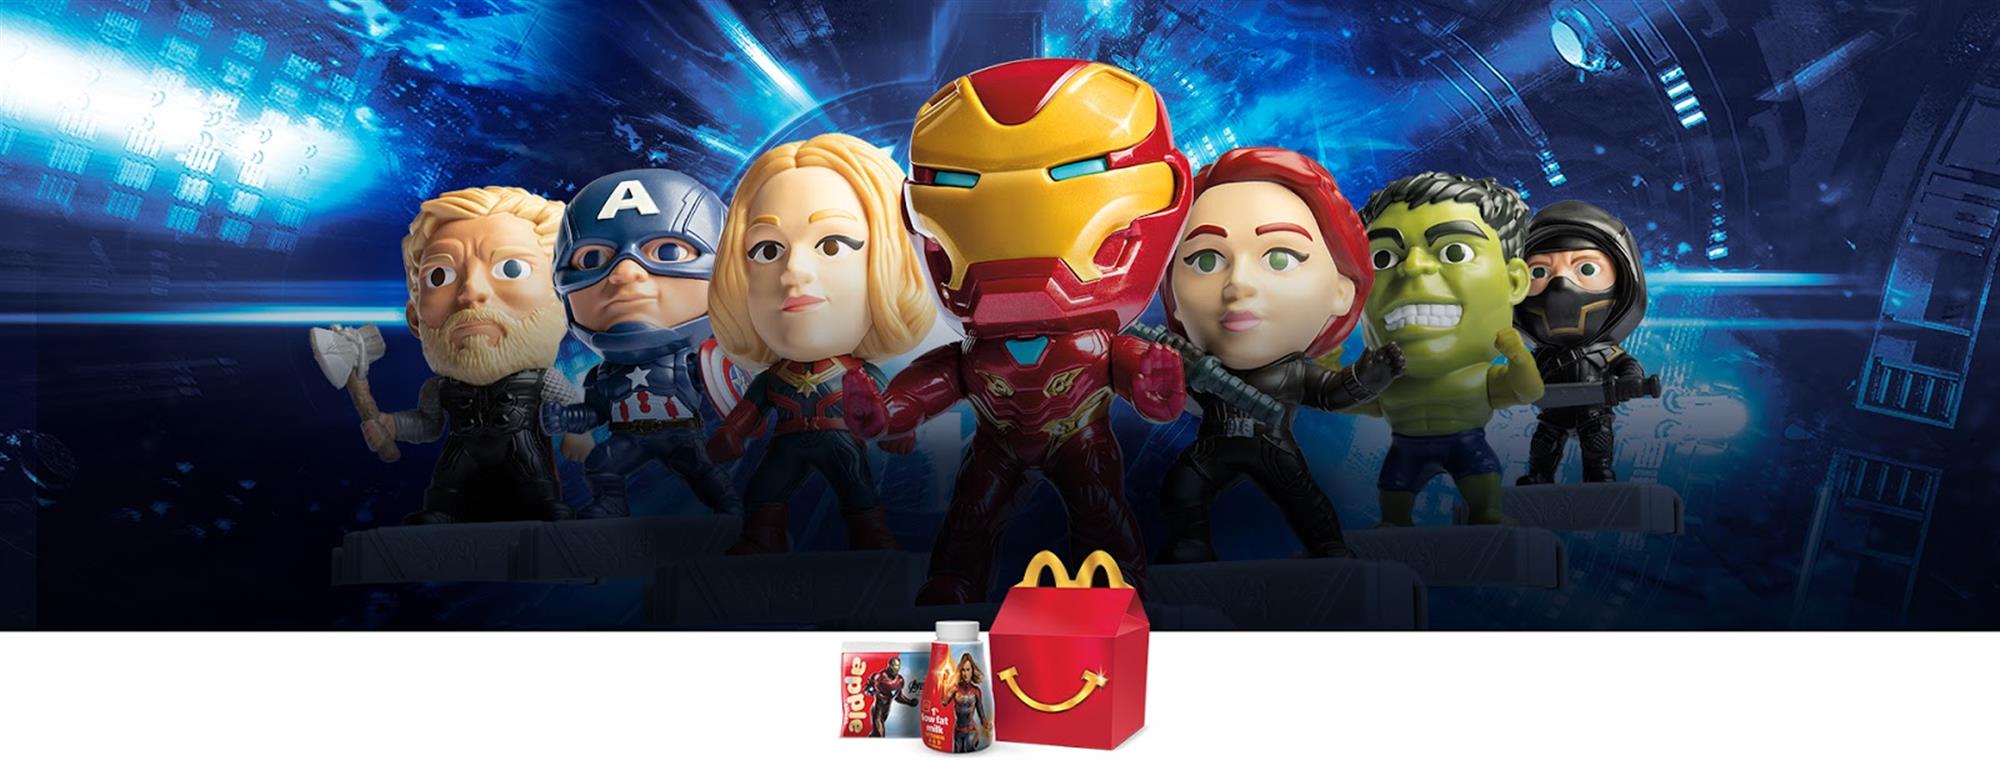 Avengers Endgame Hulk Marvel 2019 Movie McDonalds Toy Happy Meal 